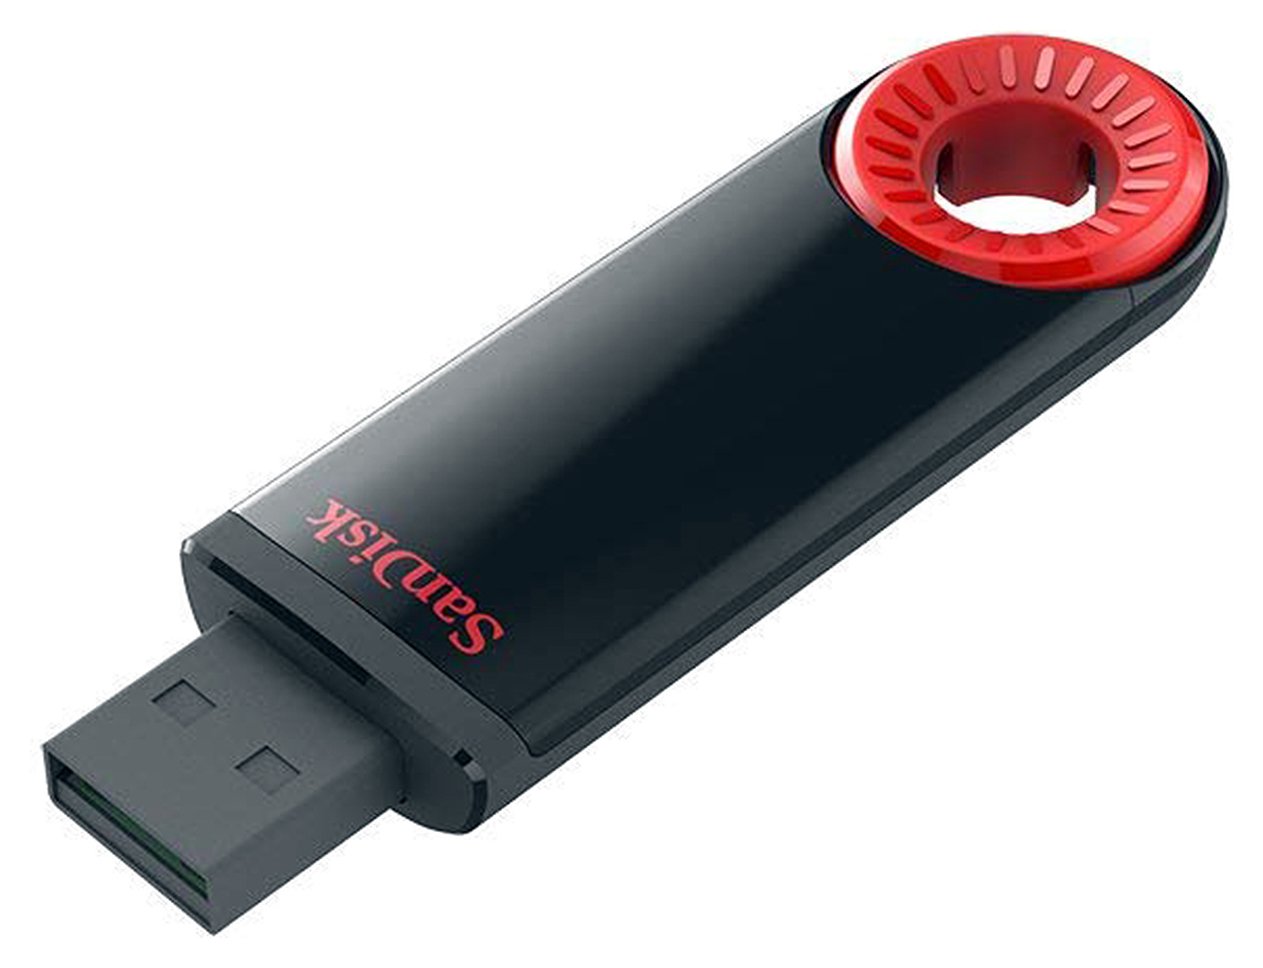 SanDisk Cruzer Dial 16GB USB Flash Drive review